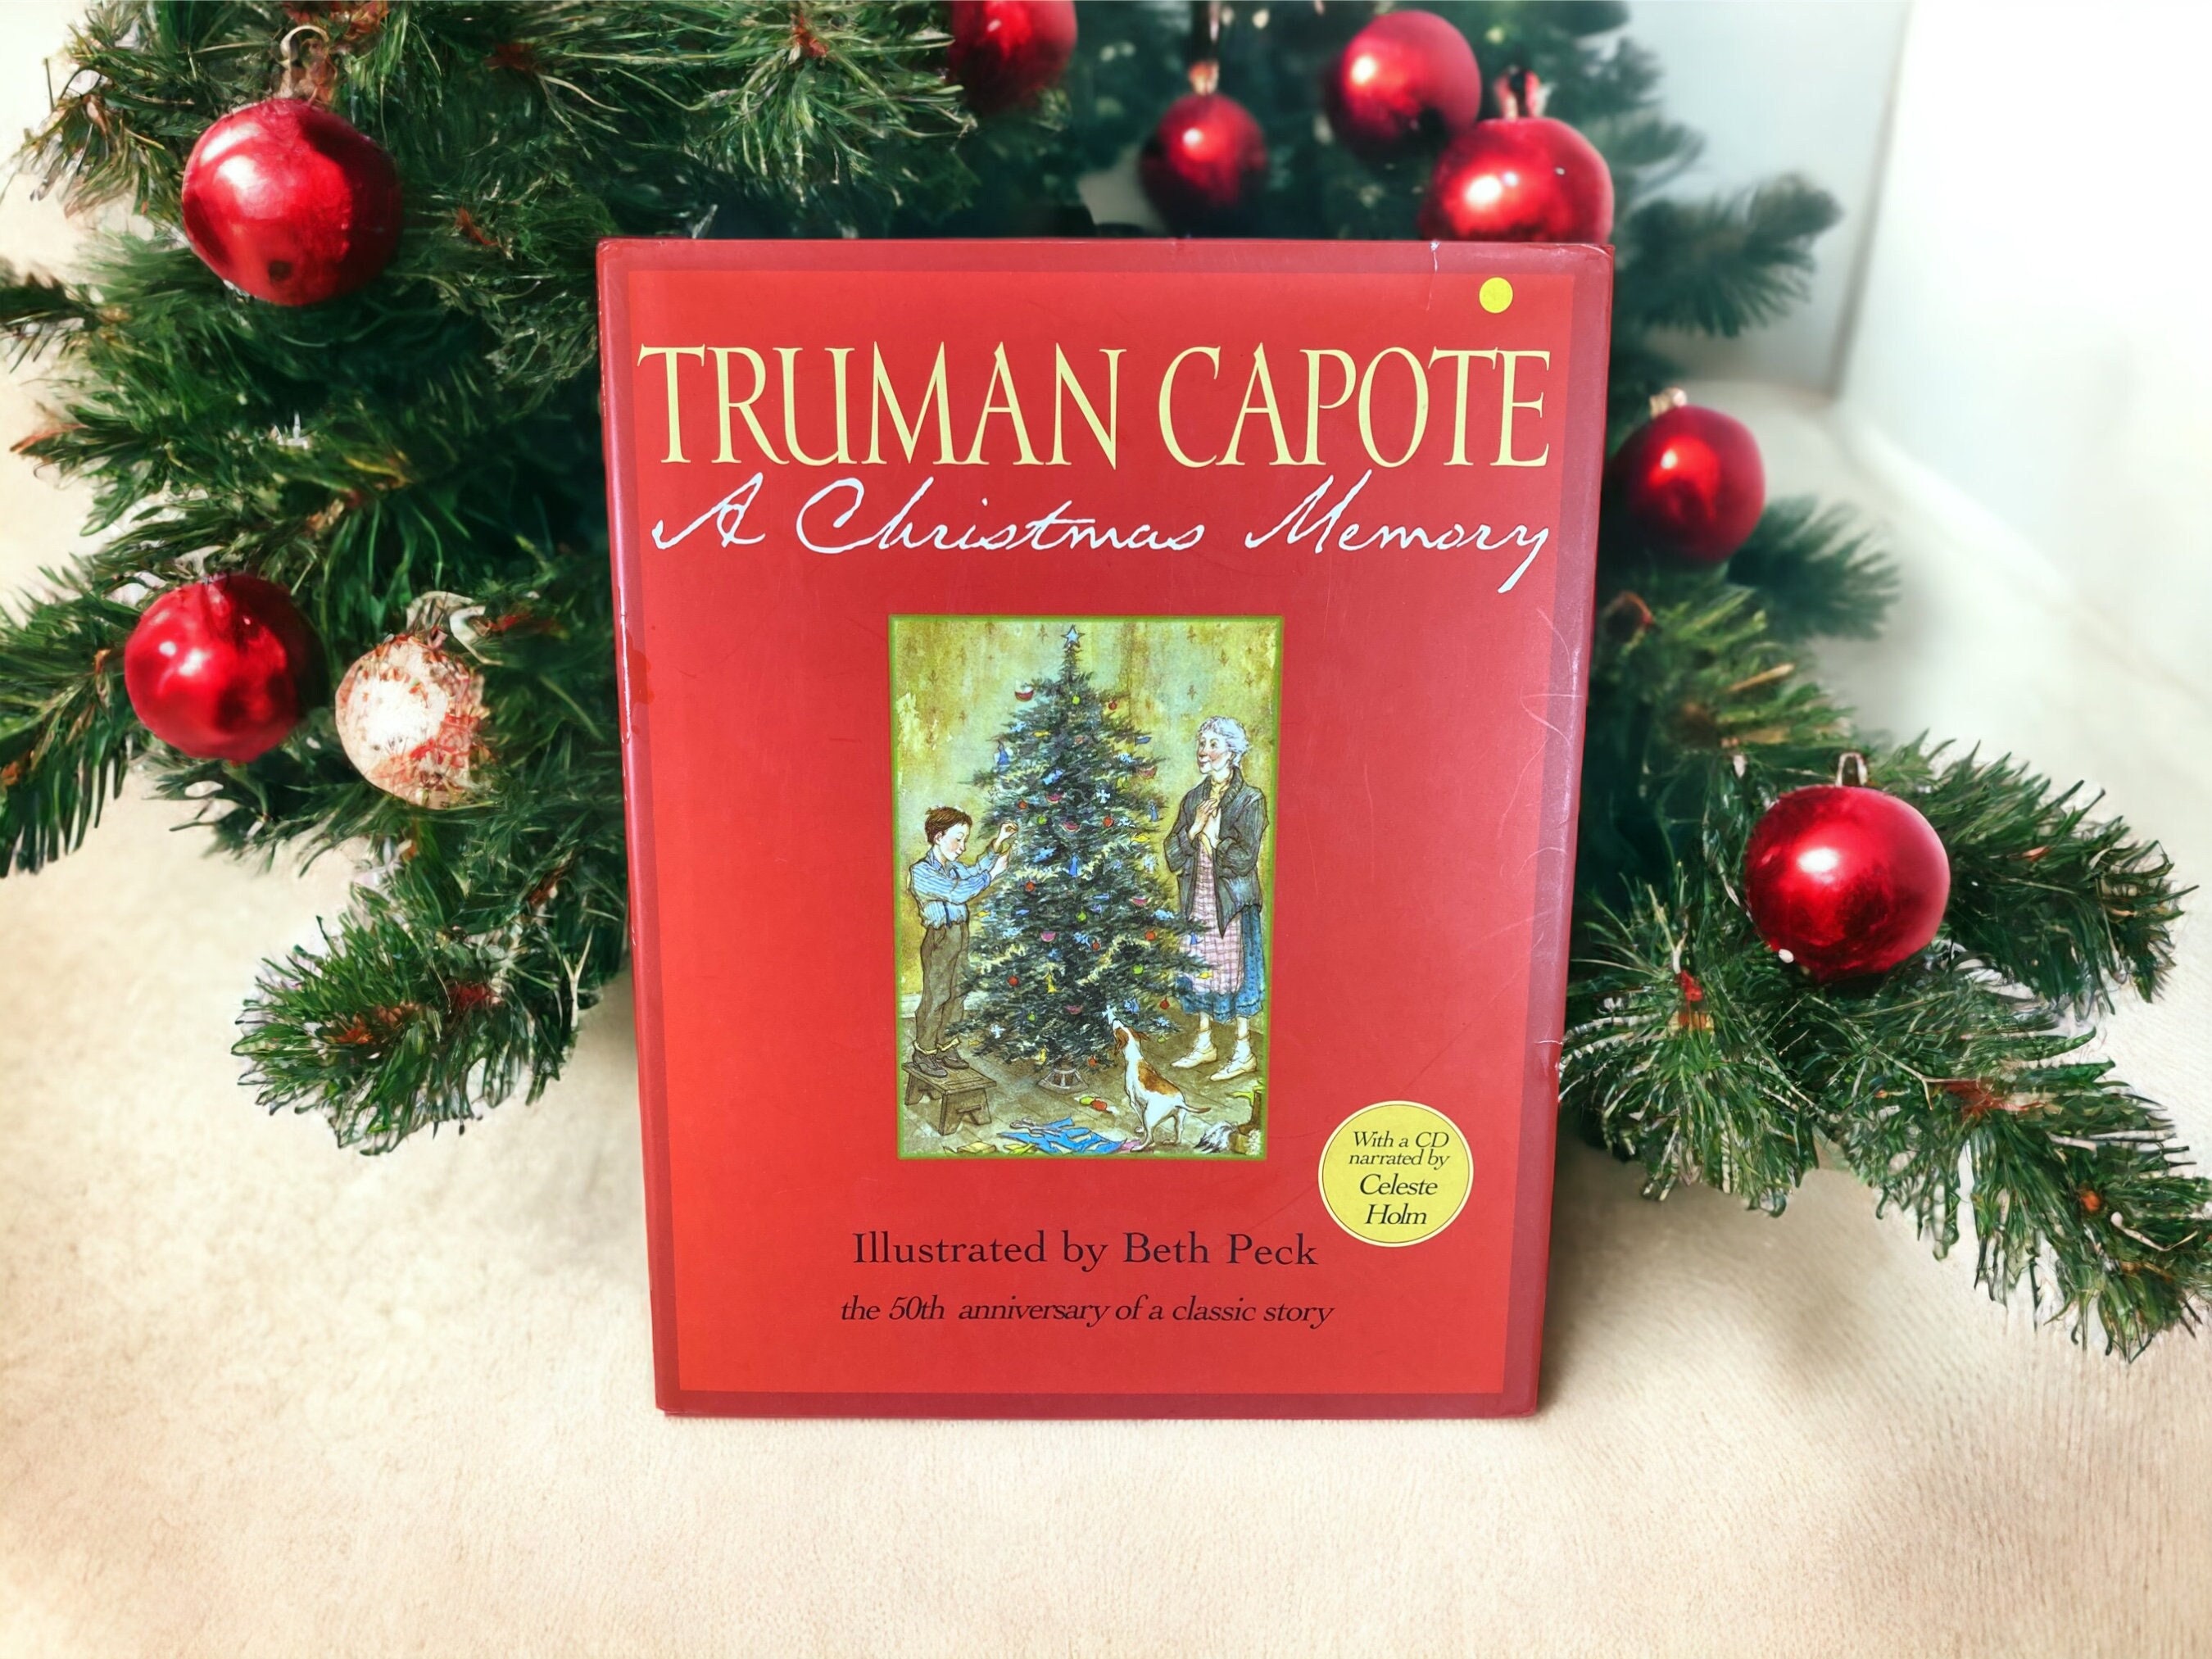 A Christmas Memory, Truman Capote